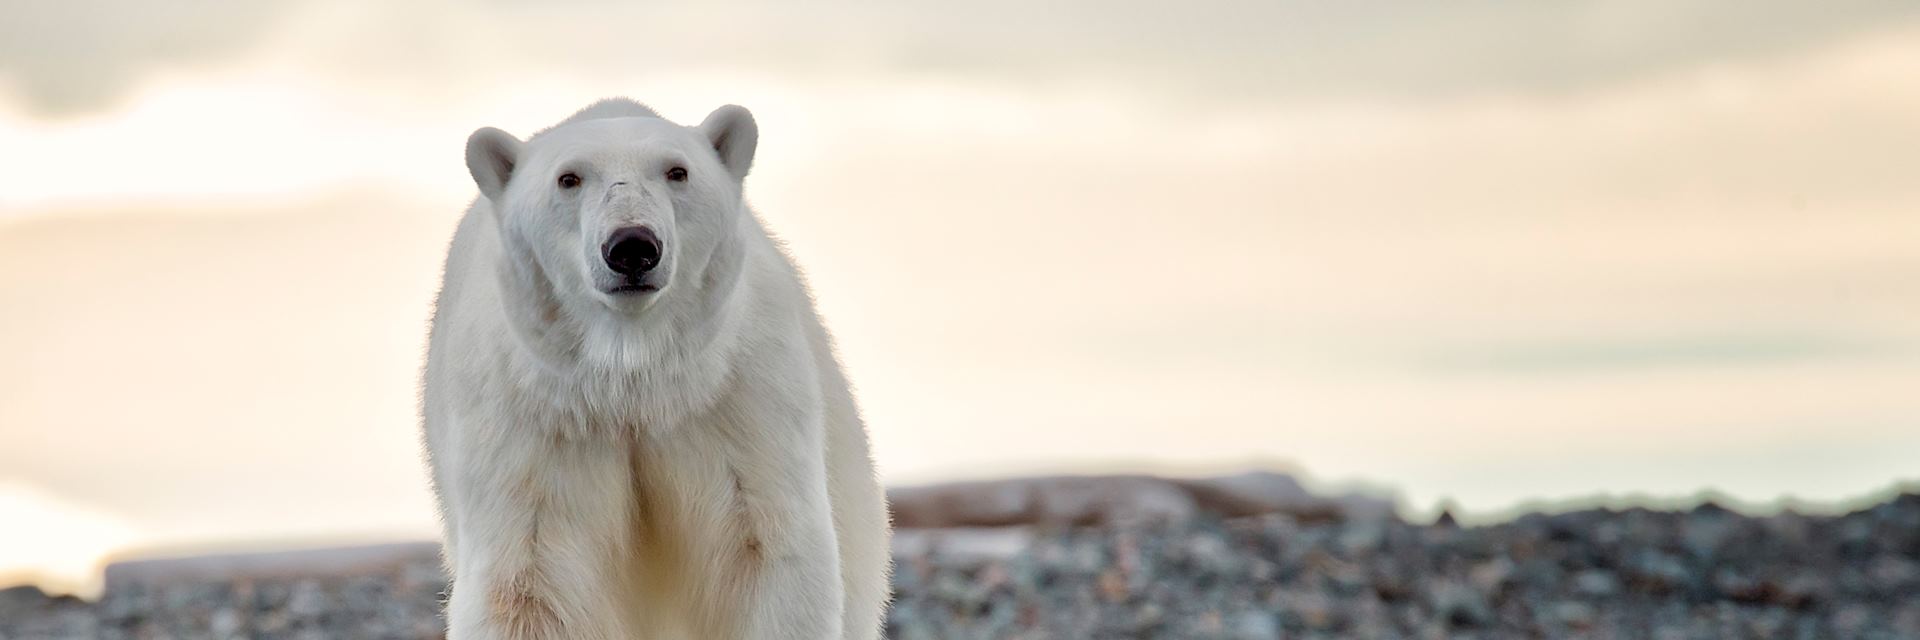 Polar bear, Churchill